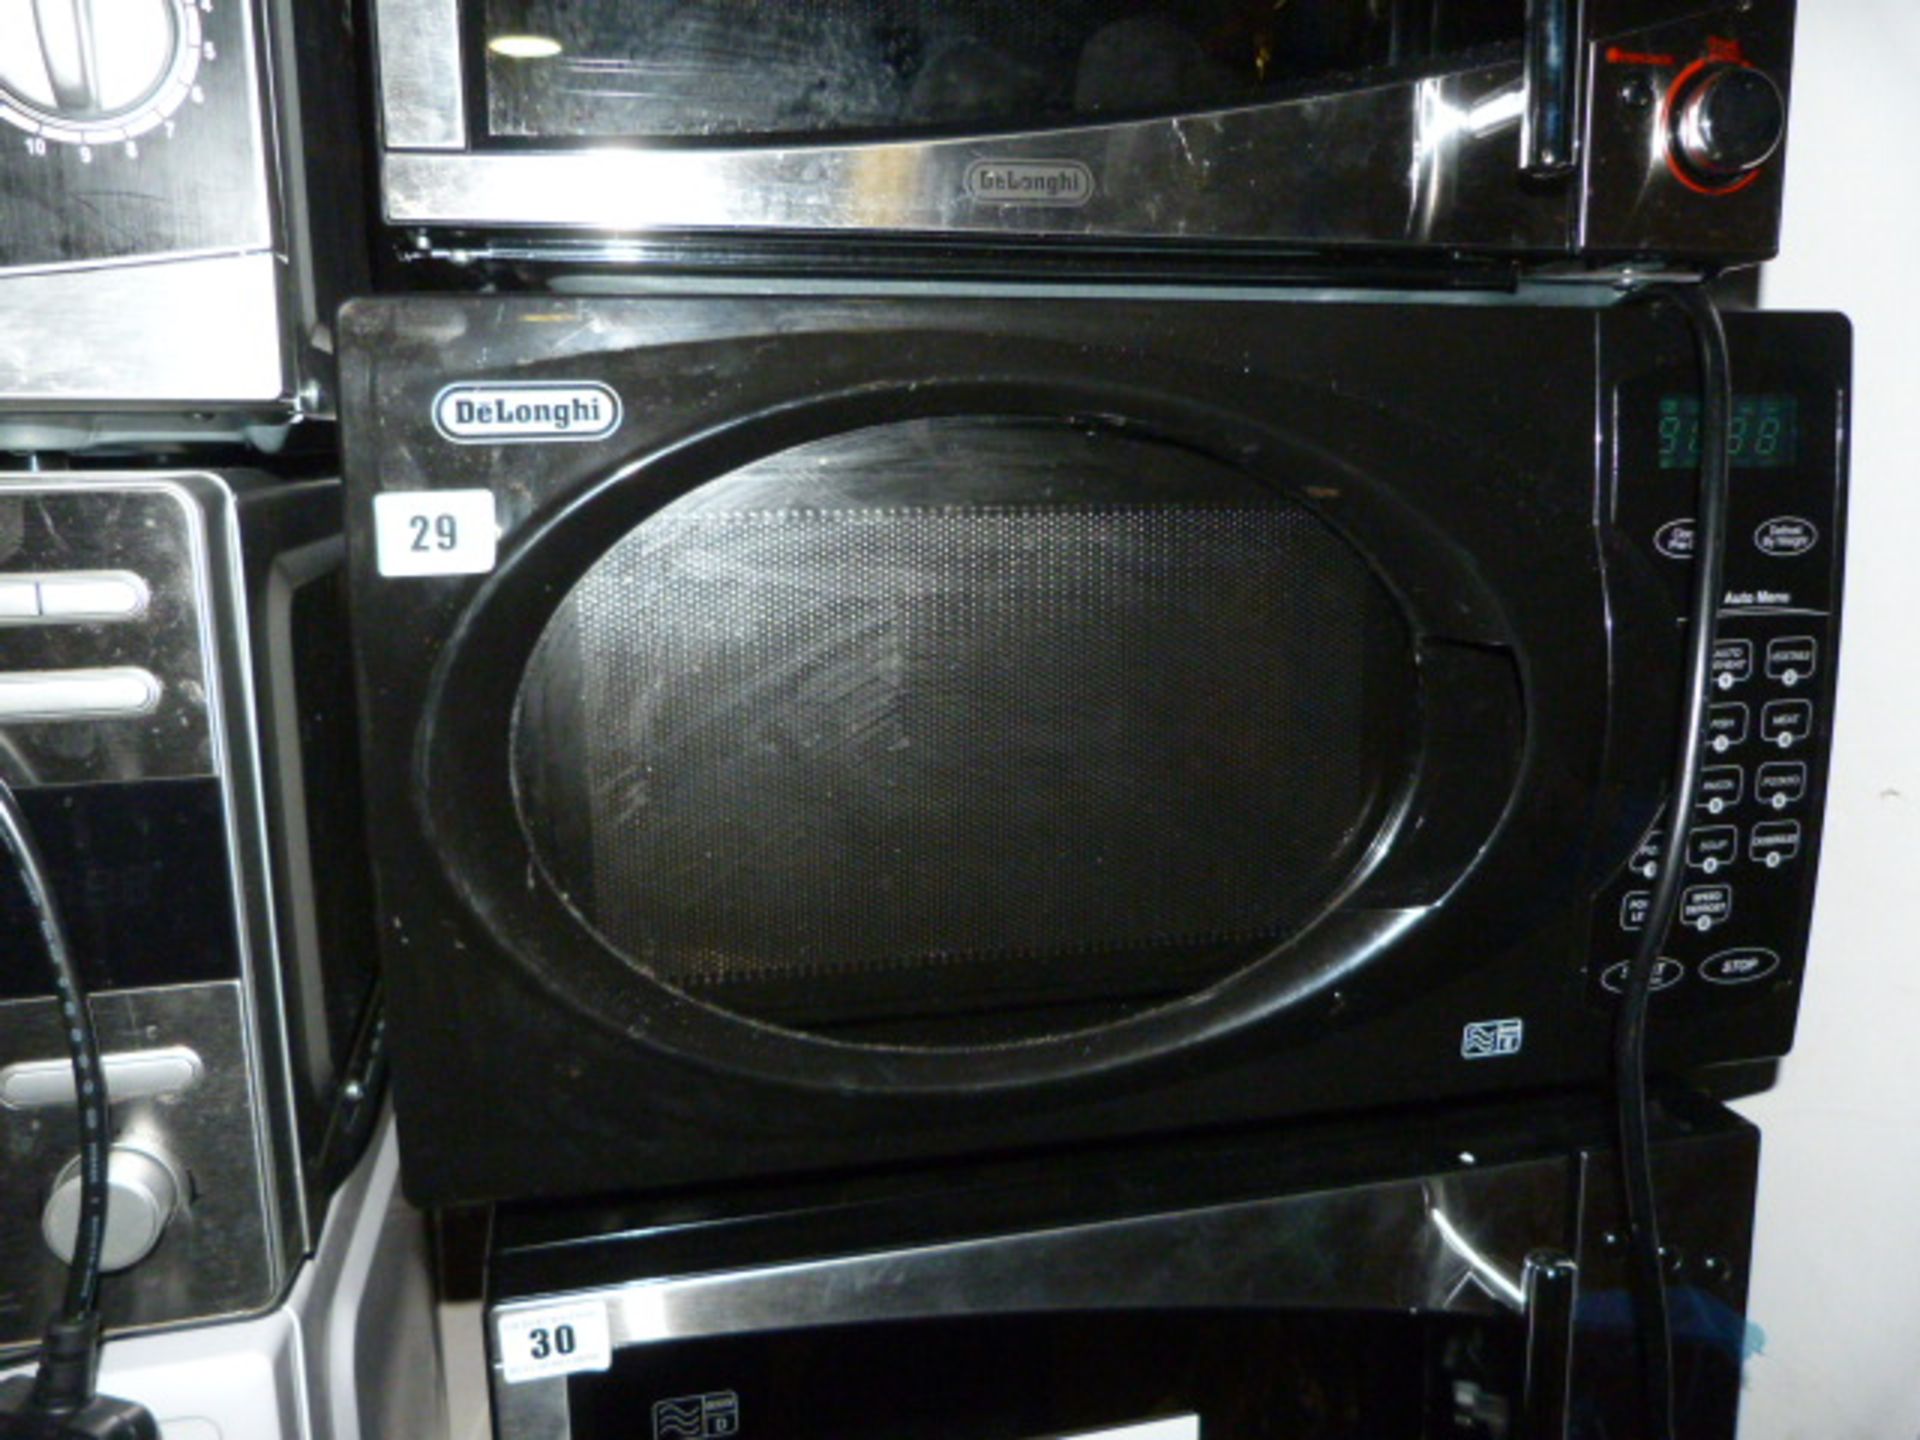 *De-Longhi 800 Watt High Gloss Black & Brushed Stainless Steel Microwave Oven